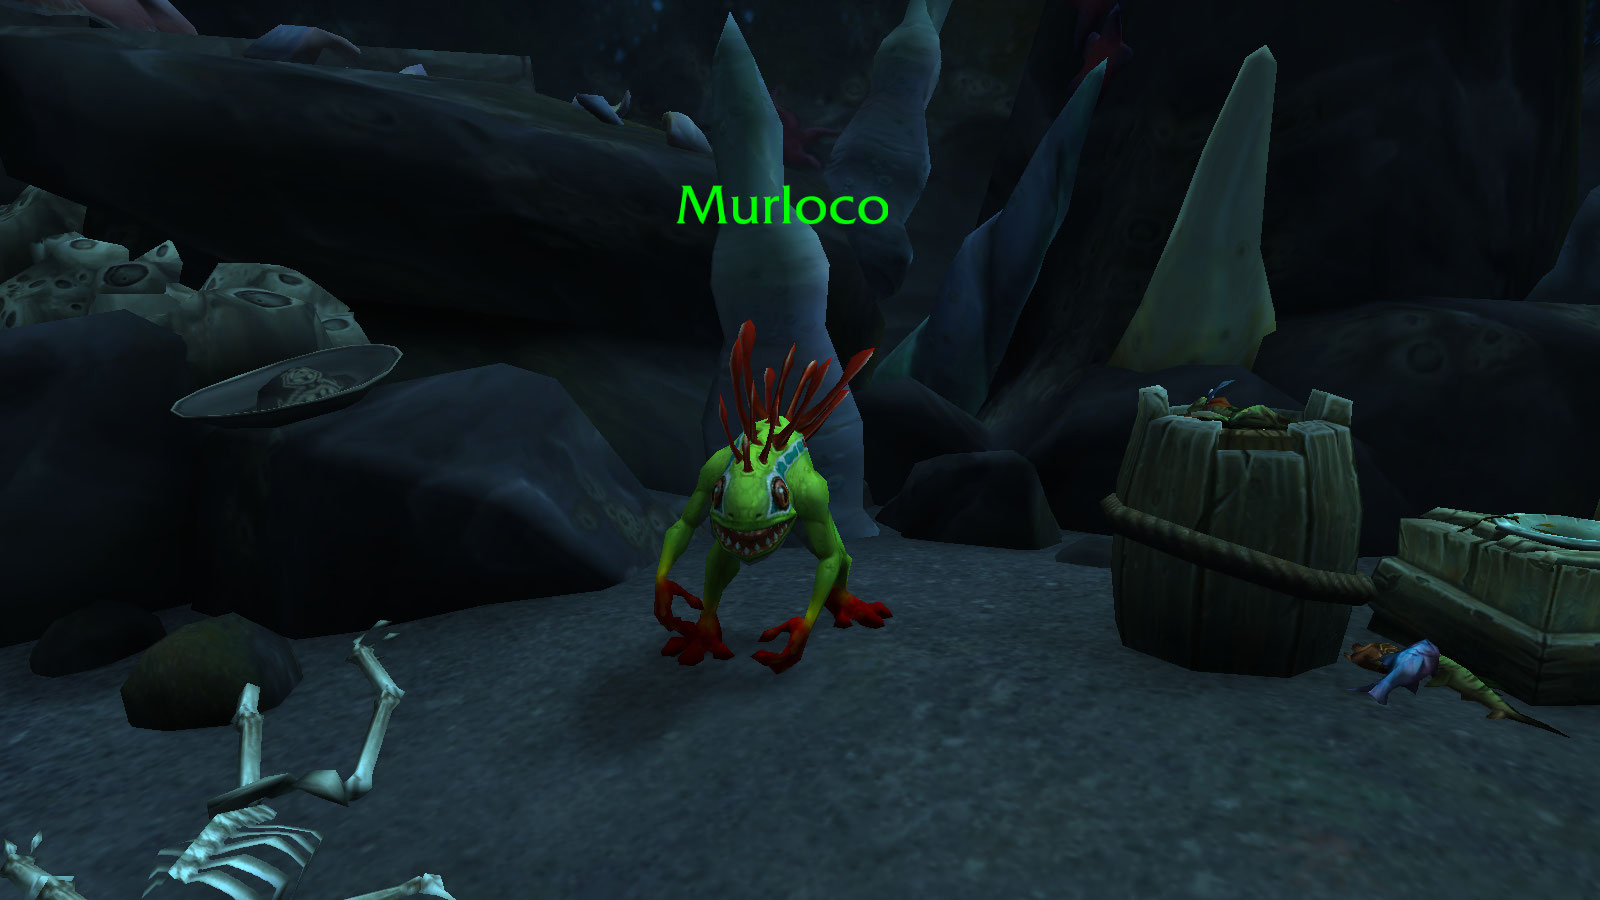 Murloco apparaît seulement pendant 5 minutes